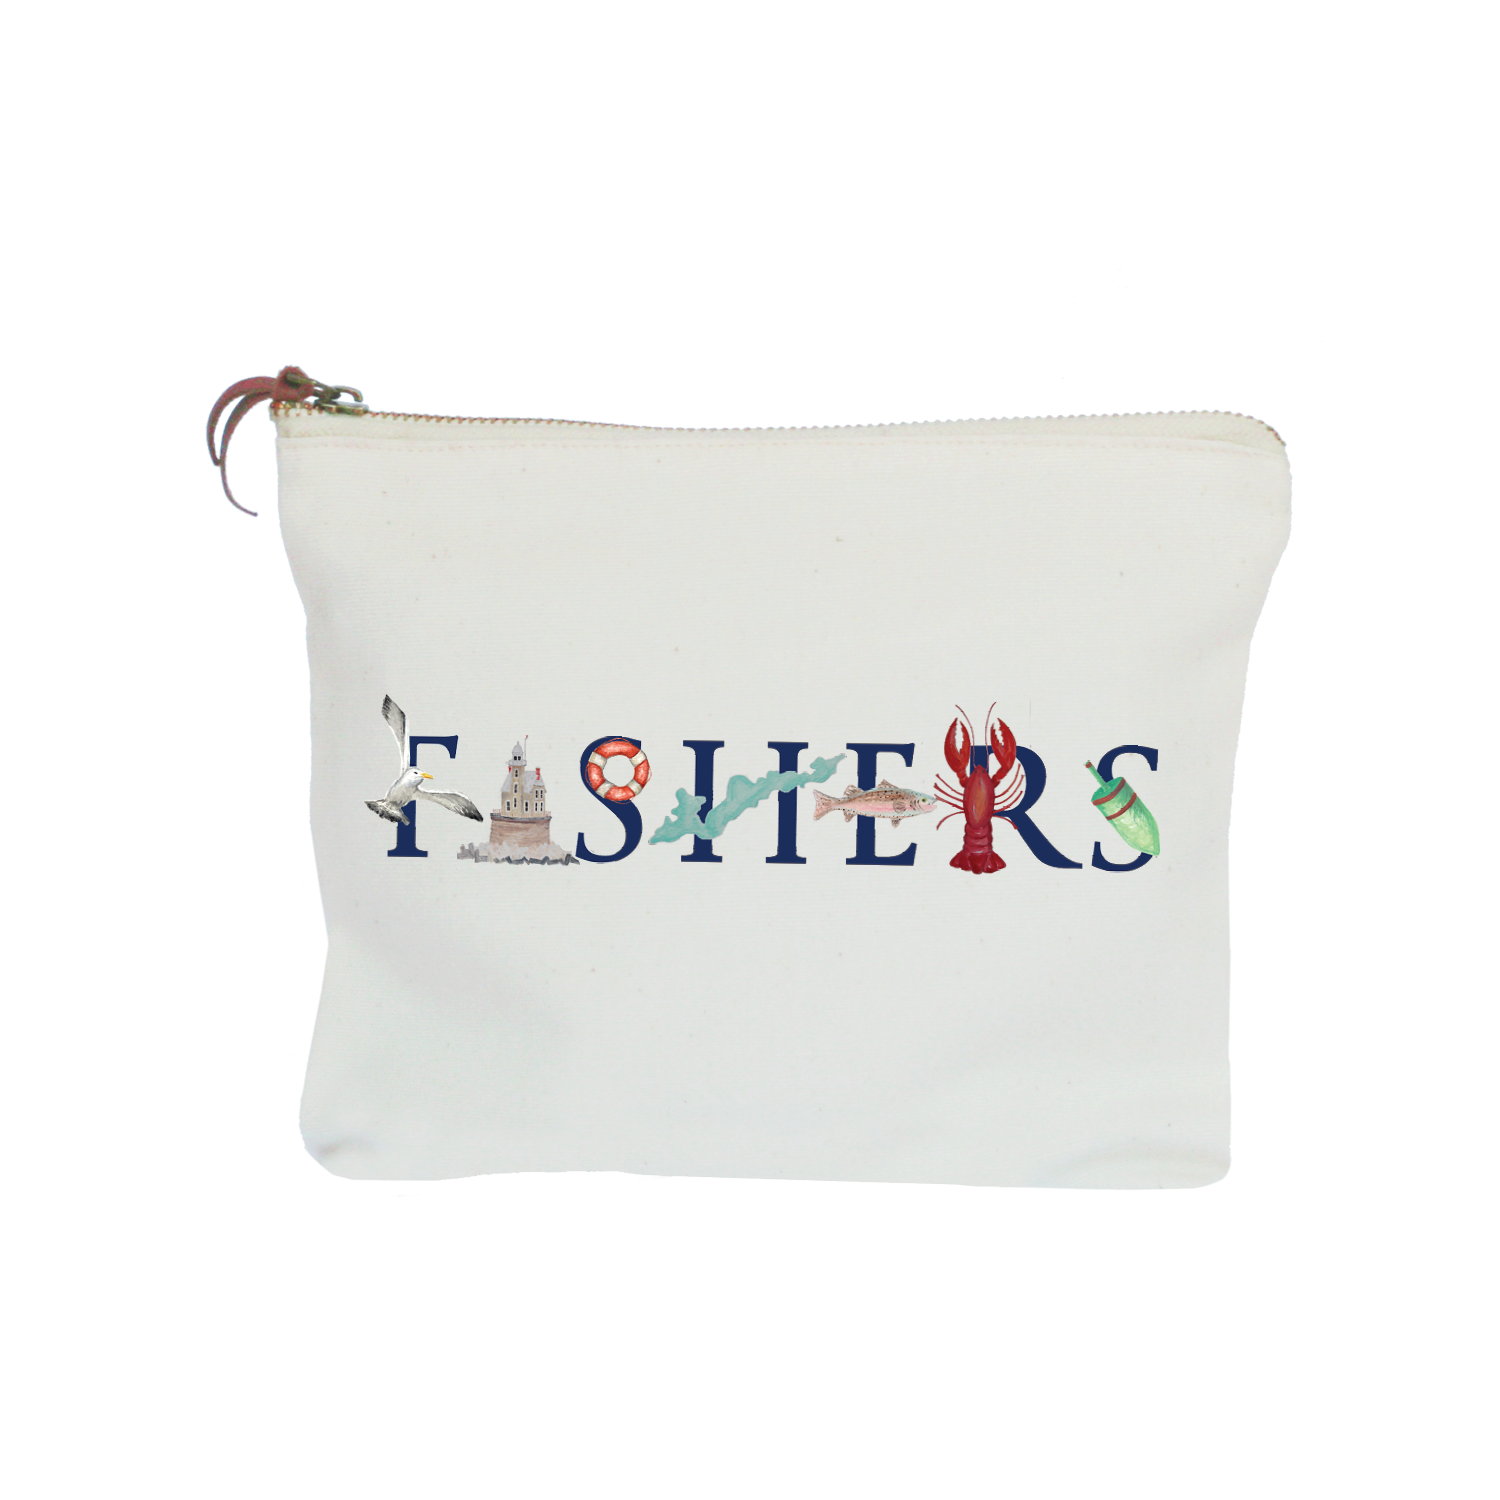 Fishers zipper pouch